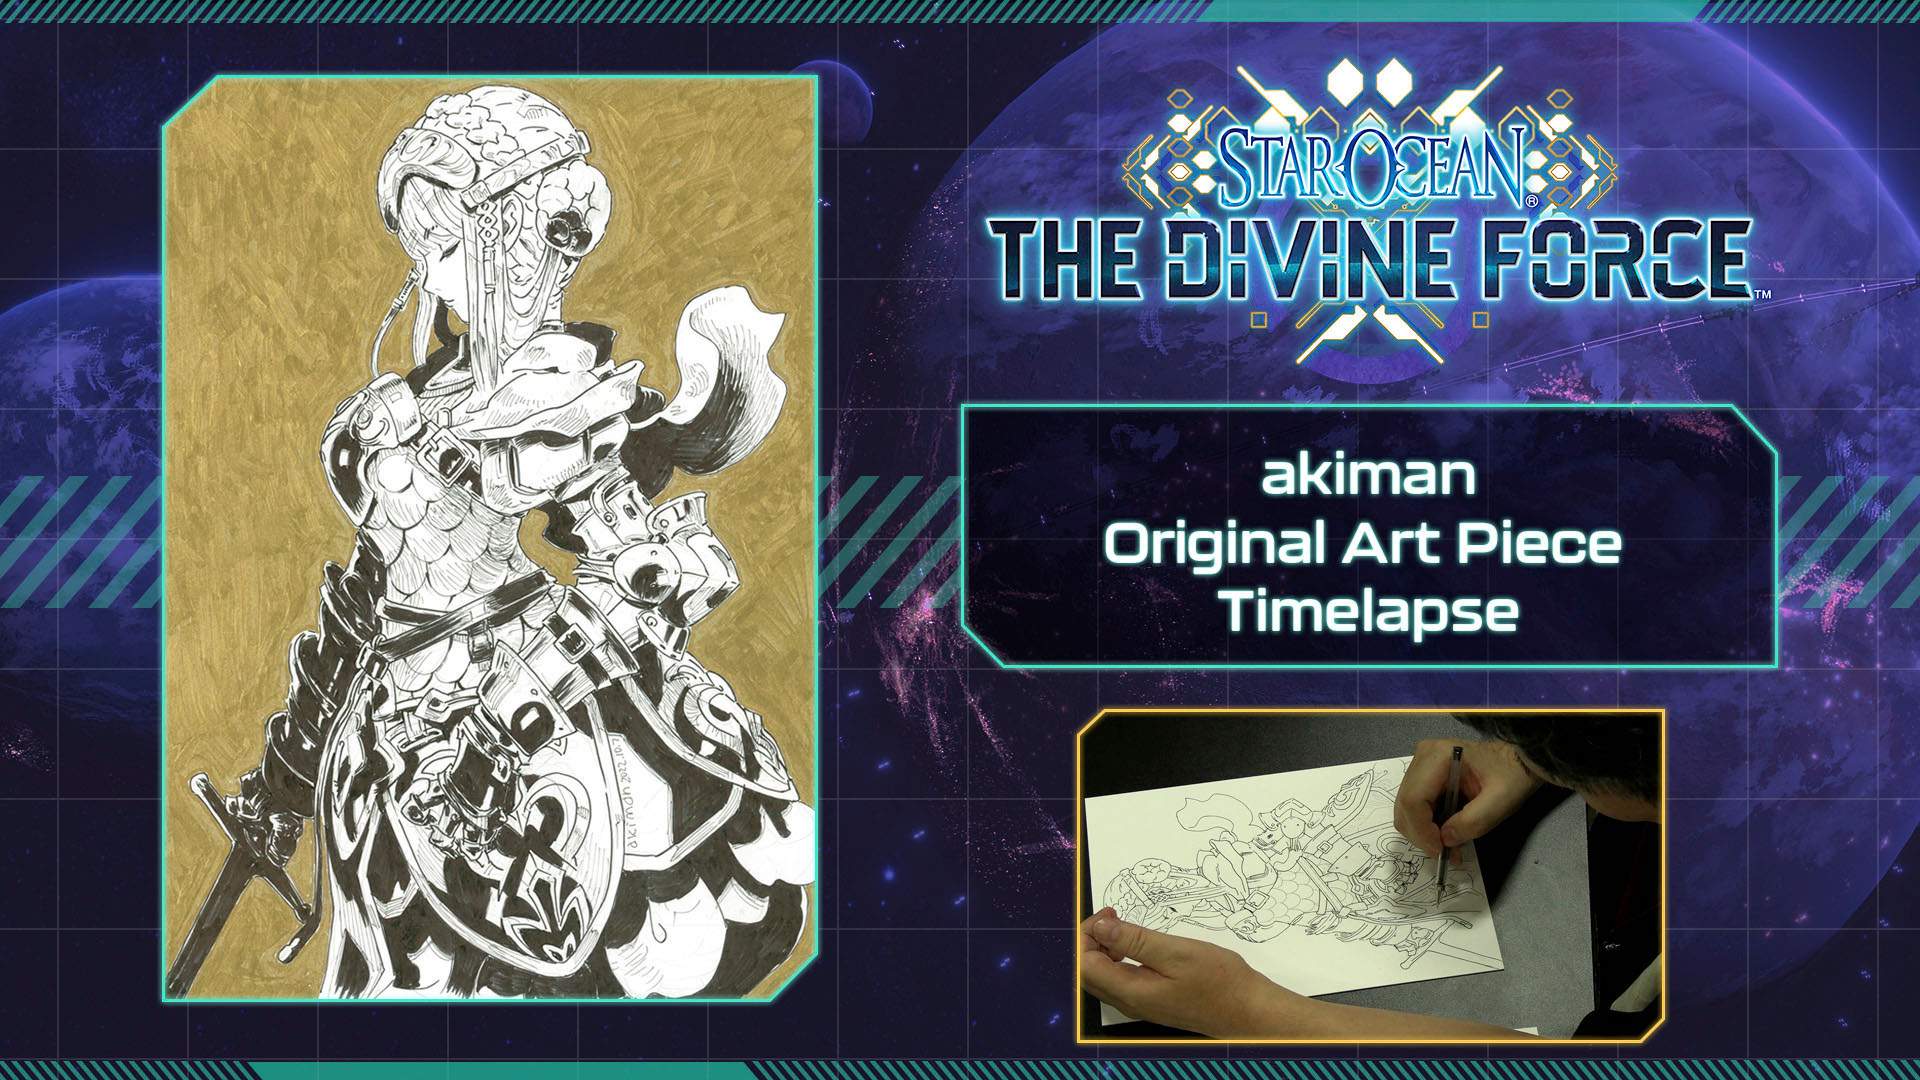 Introduction to the akiman Original Art Piece Timelapse Video